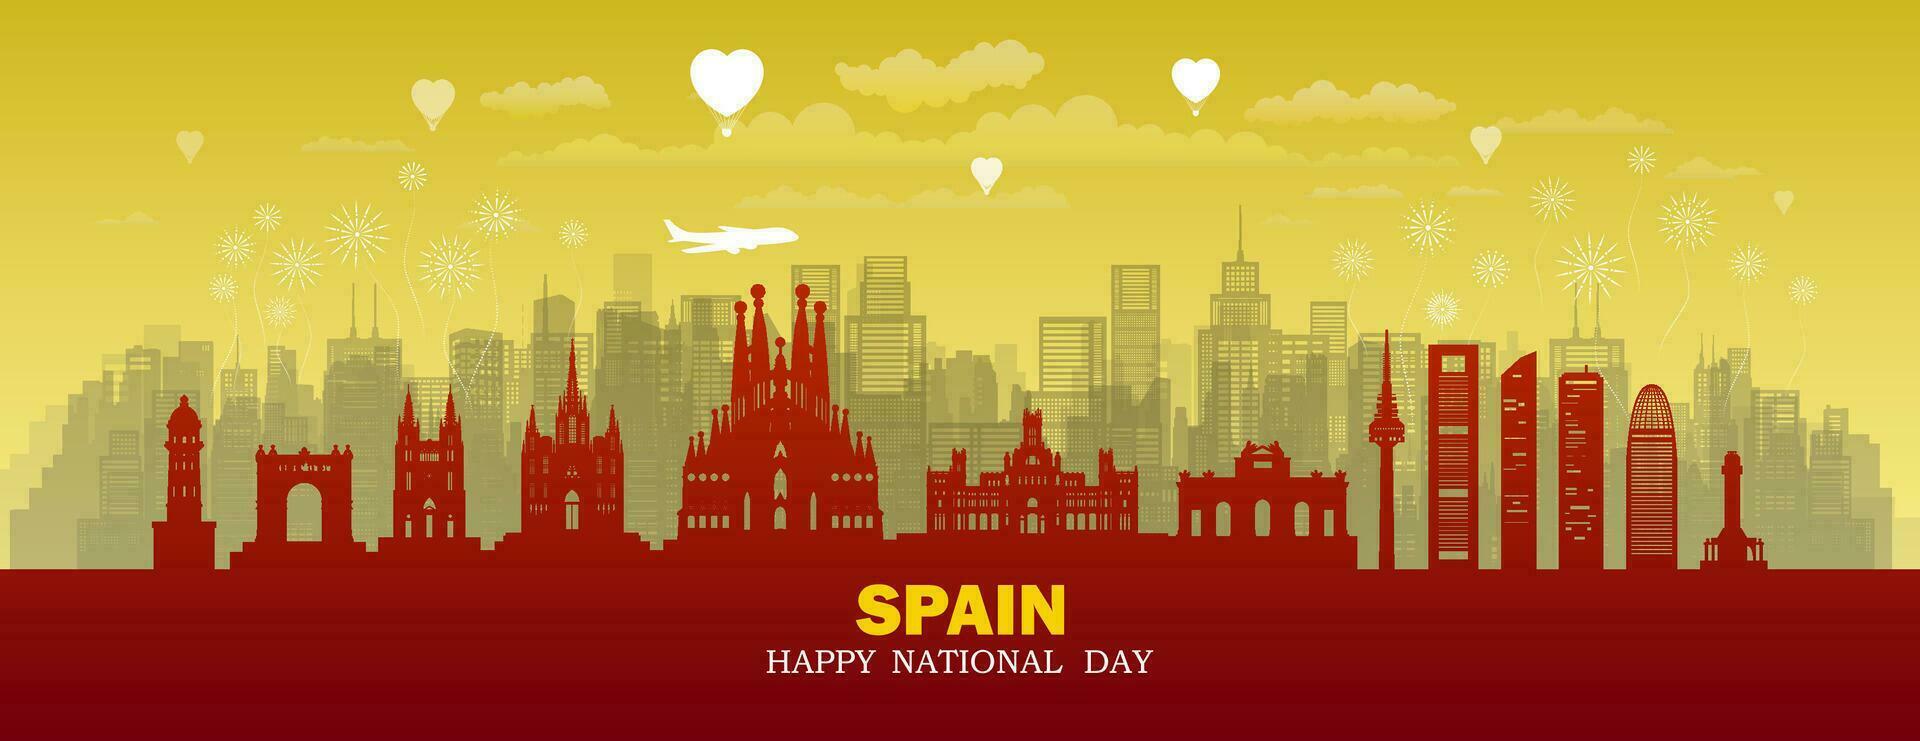 reizen oriëntatiepunten Spanje met silhouet architectuur achtergrond, Spanje republiek dag. vector